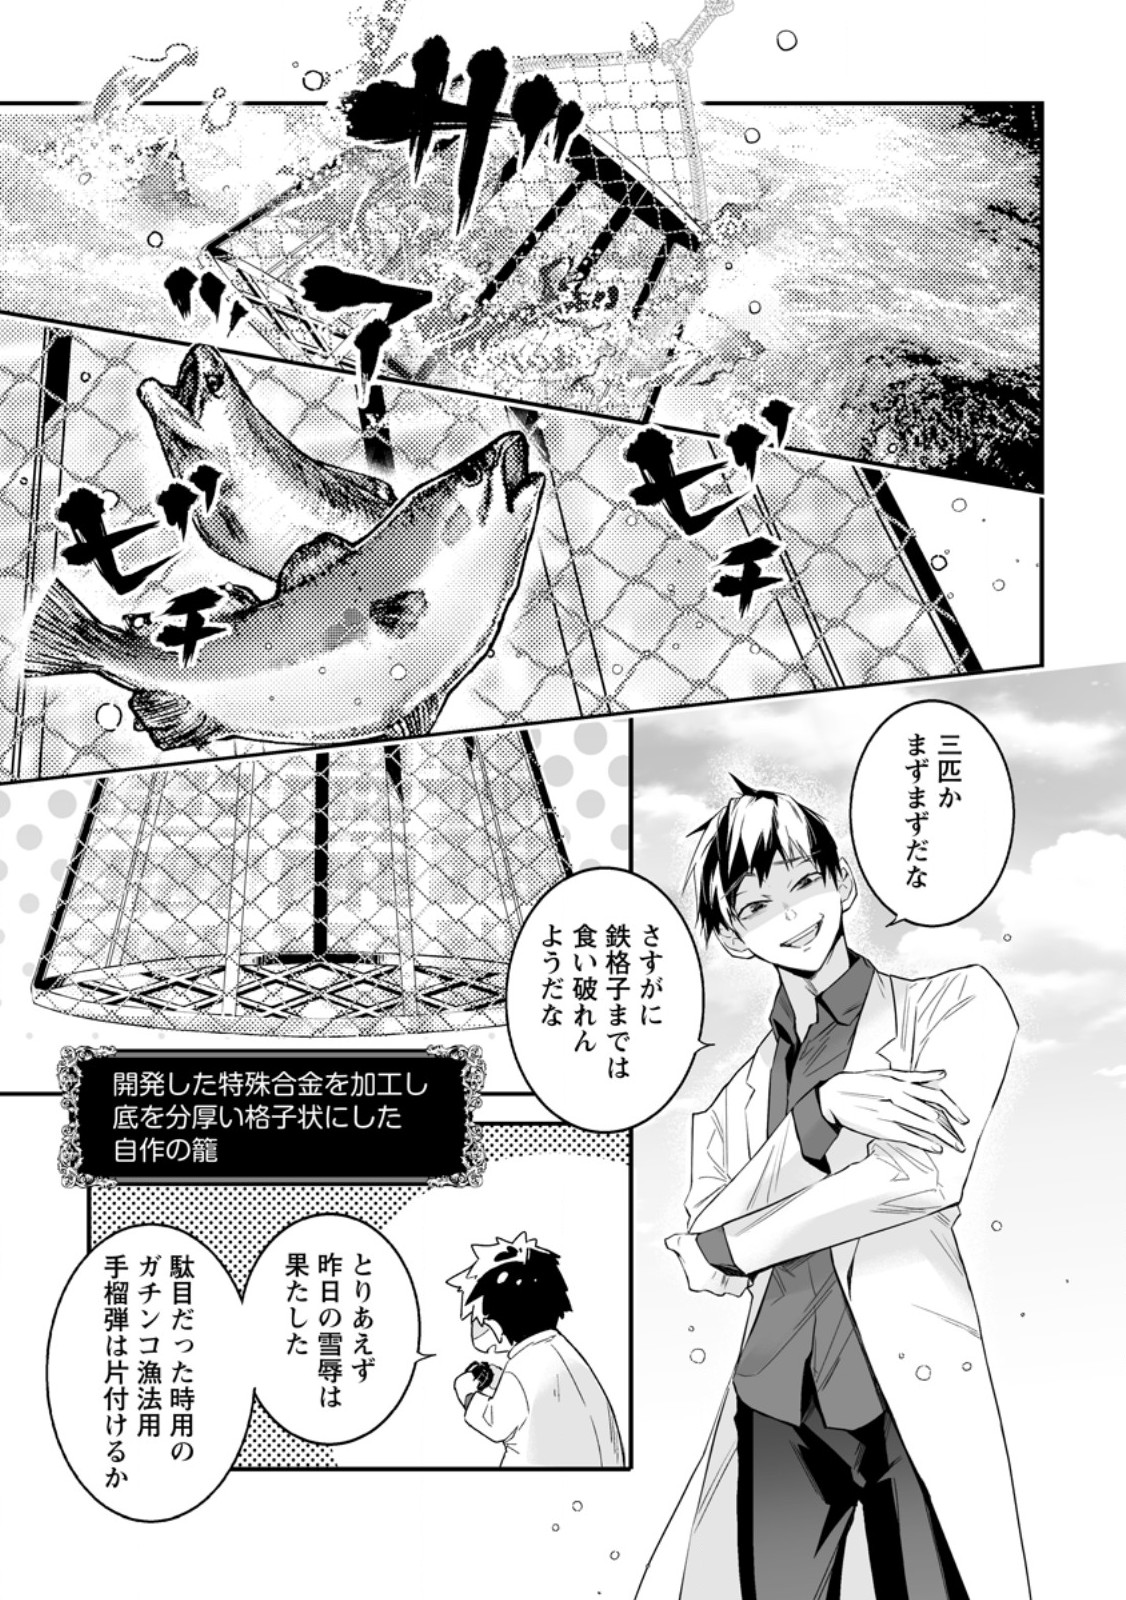 Hakui no Eiyuu - Chapter 31.1 - Page 9